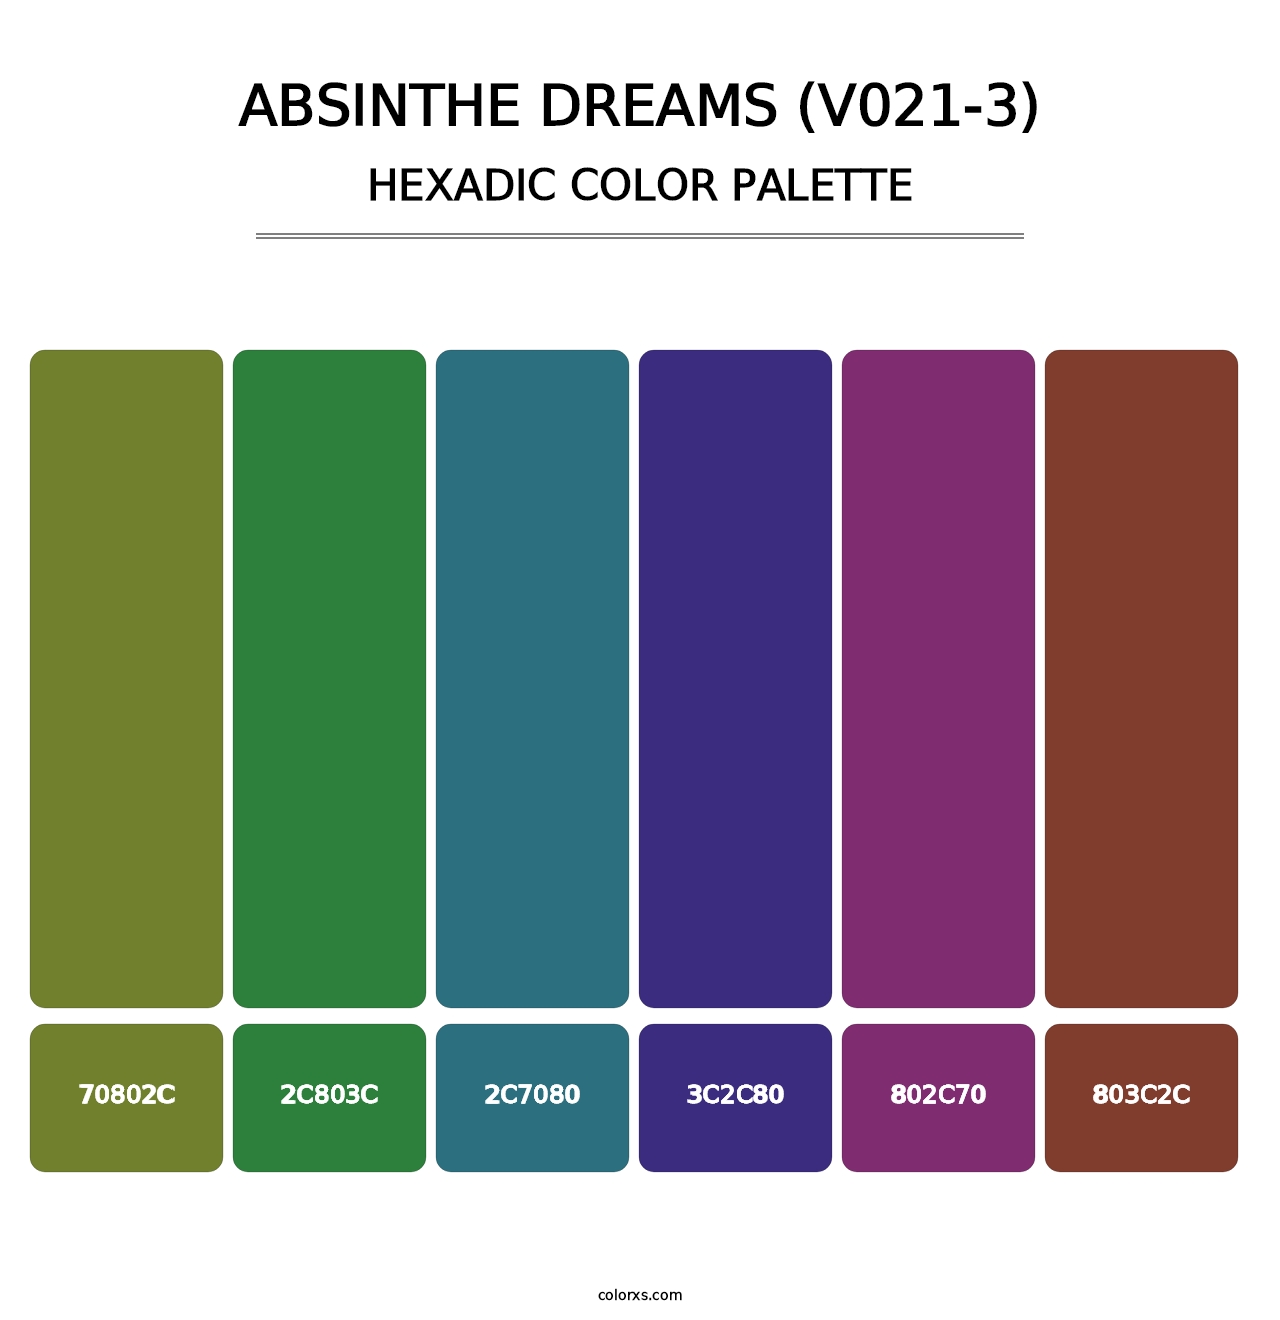 Absinthe Dreams (V021-3) - Hexadic Color Palette